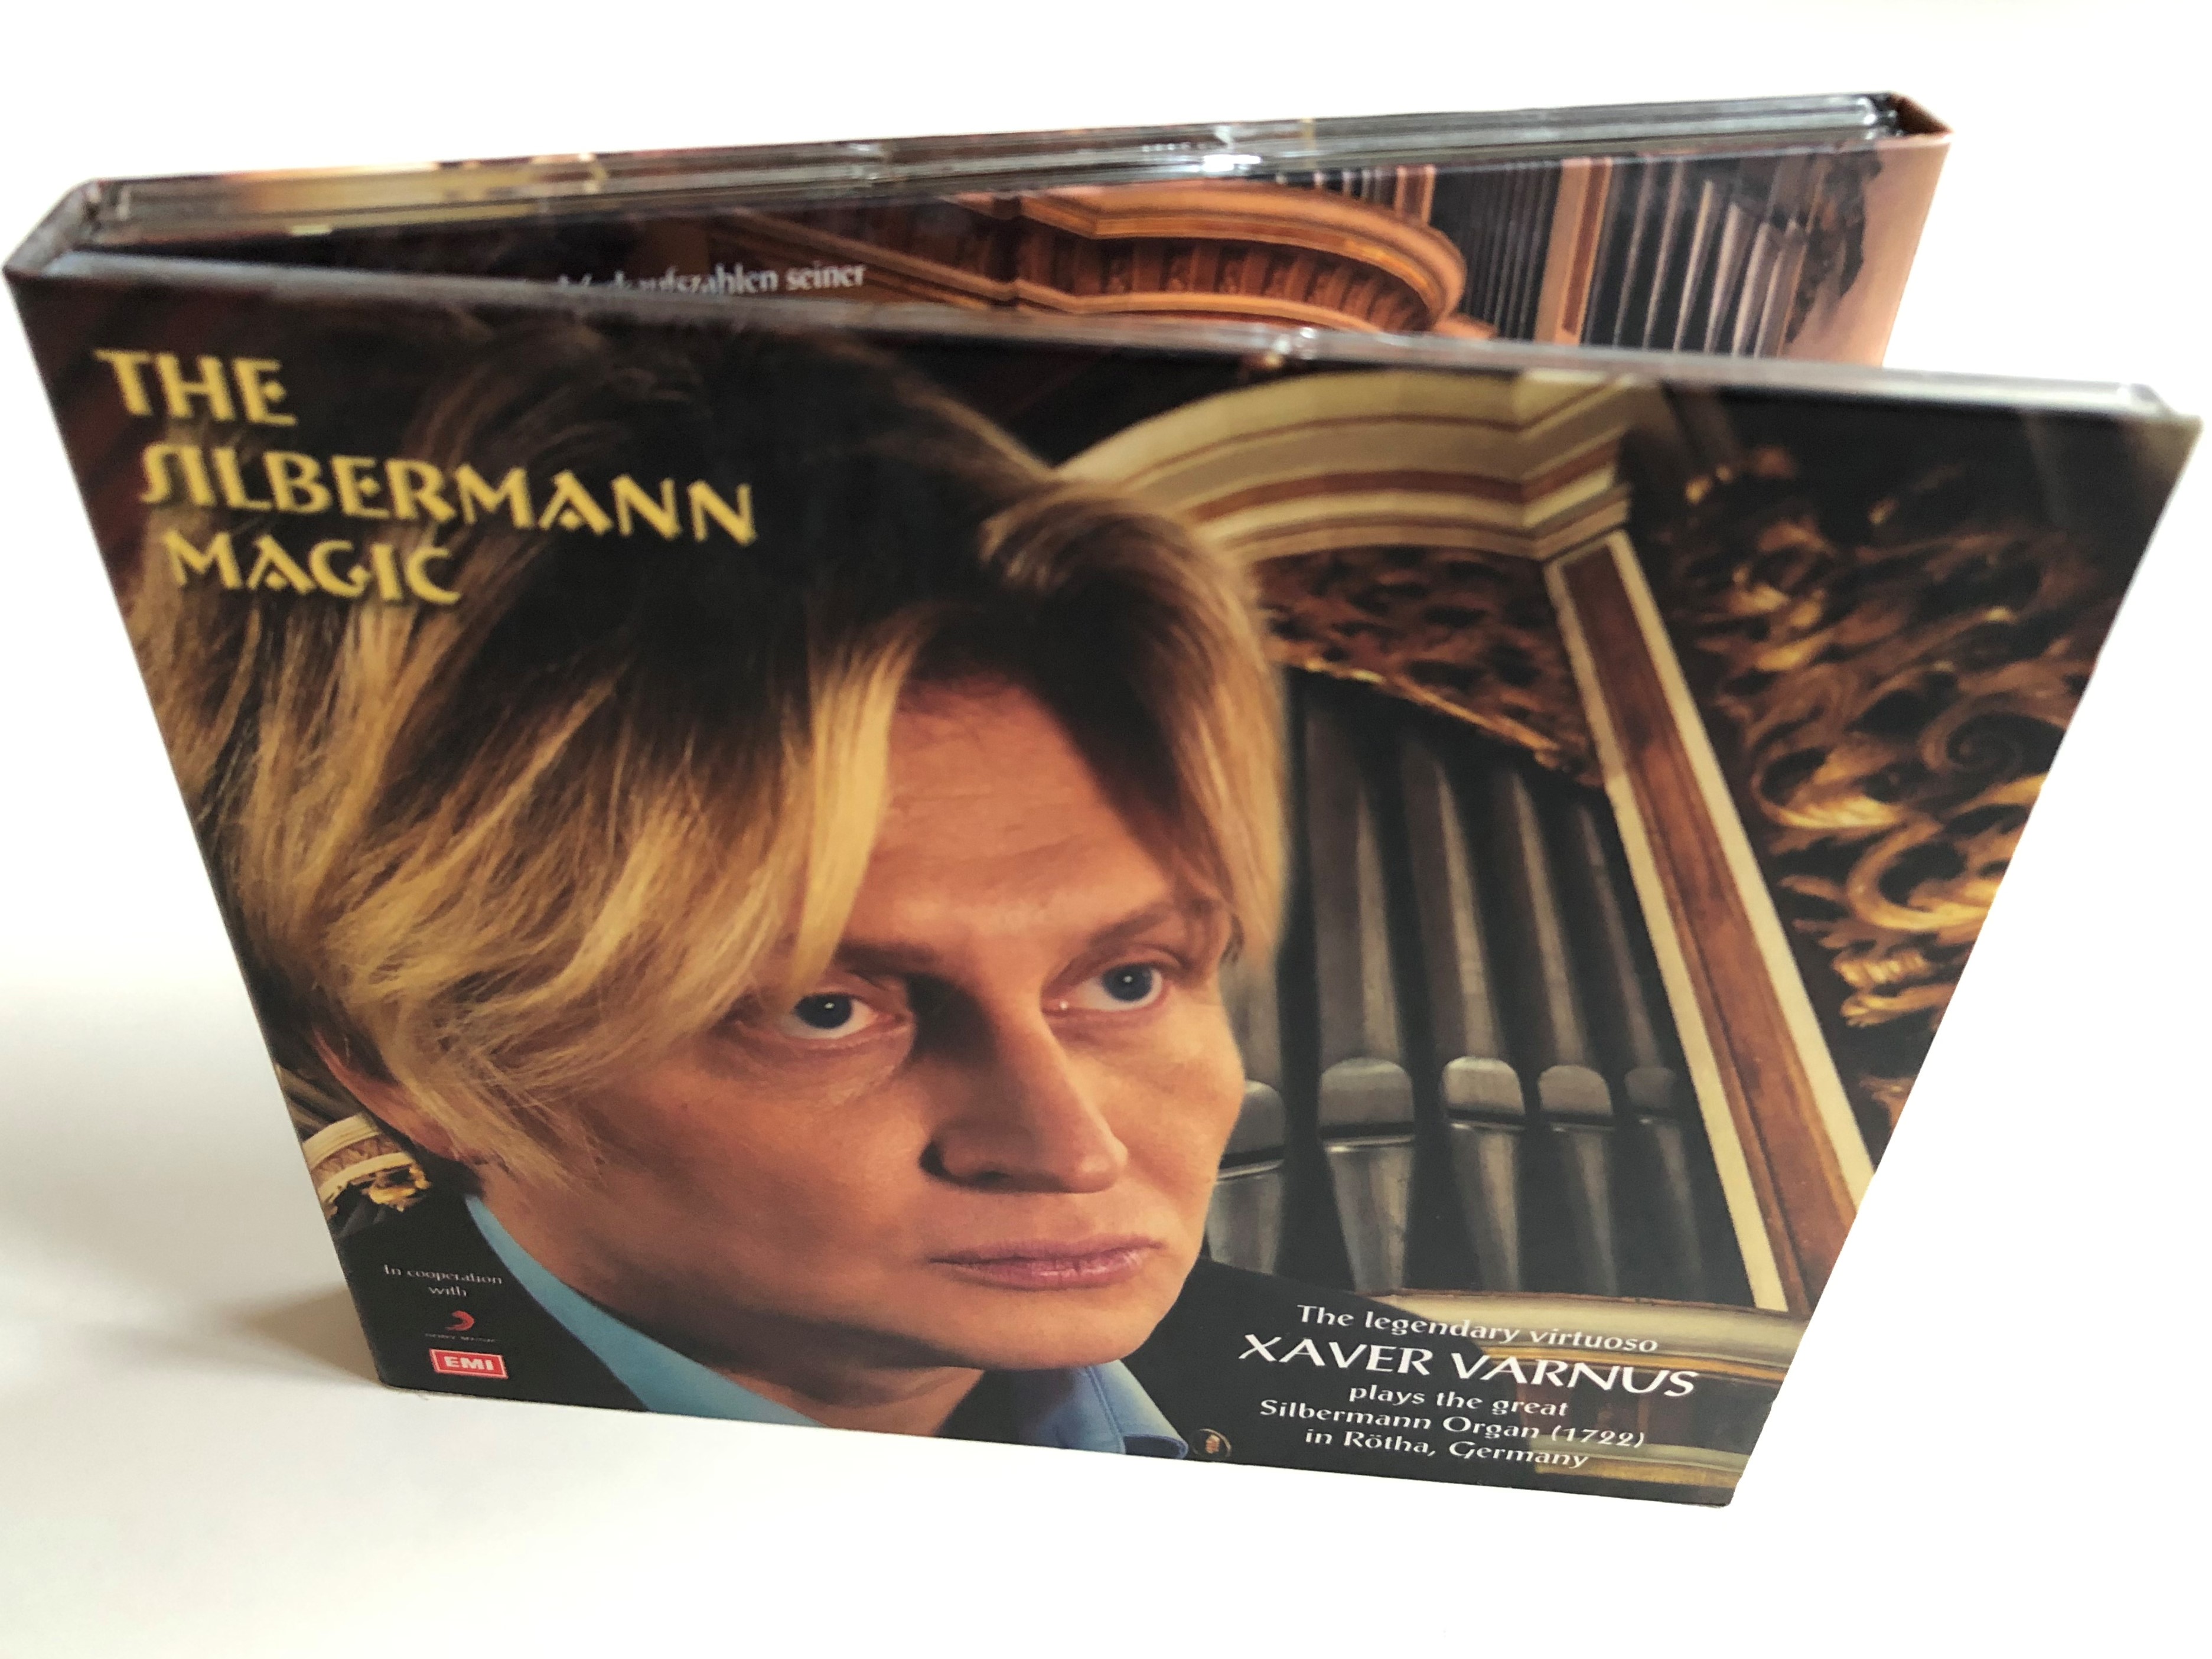 the-silbermann-magic-xaver-varnus-the-legendary-virtuoso-plays-the-great-silbermann-organ-1730-in-r-tha-germany-j.-s.-bach-f.-mendelssohn-bartholdy-cd-2-dvd-emi.jpg